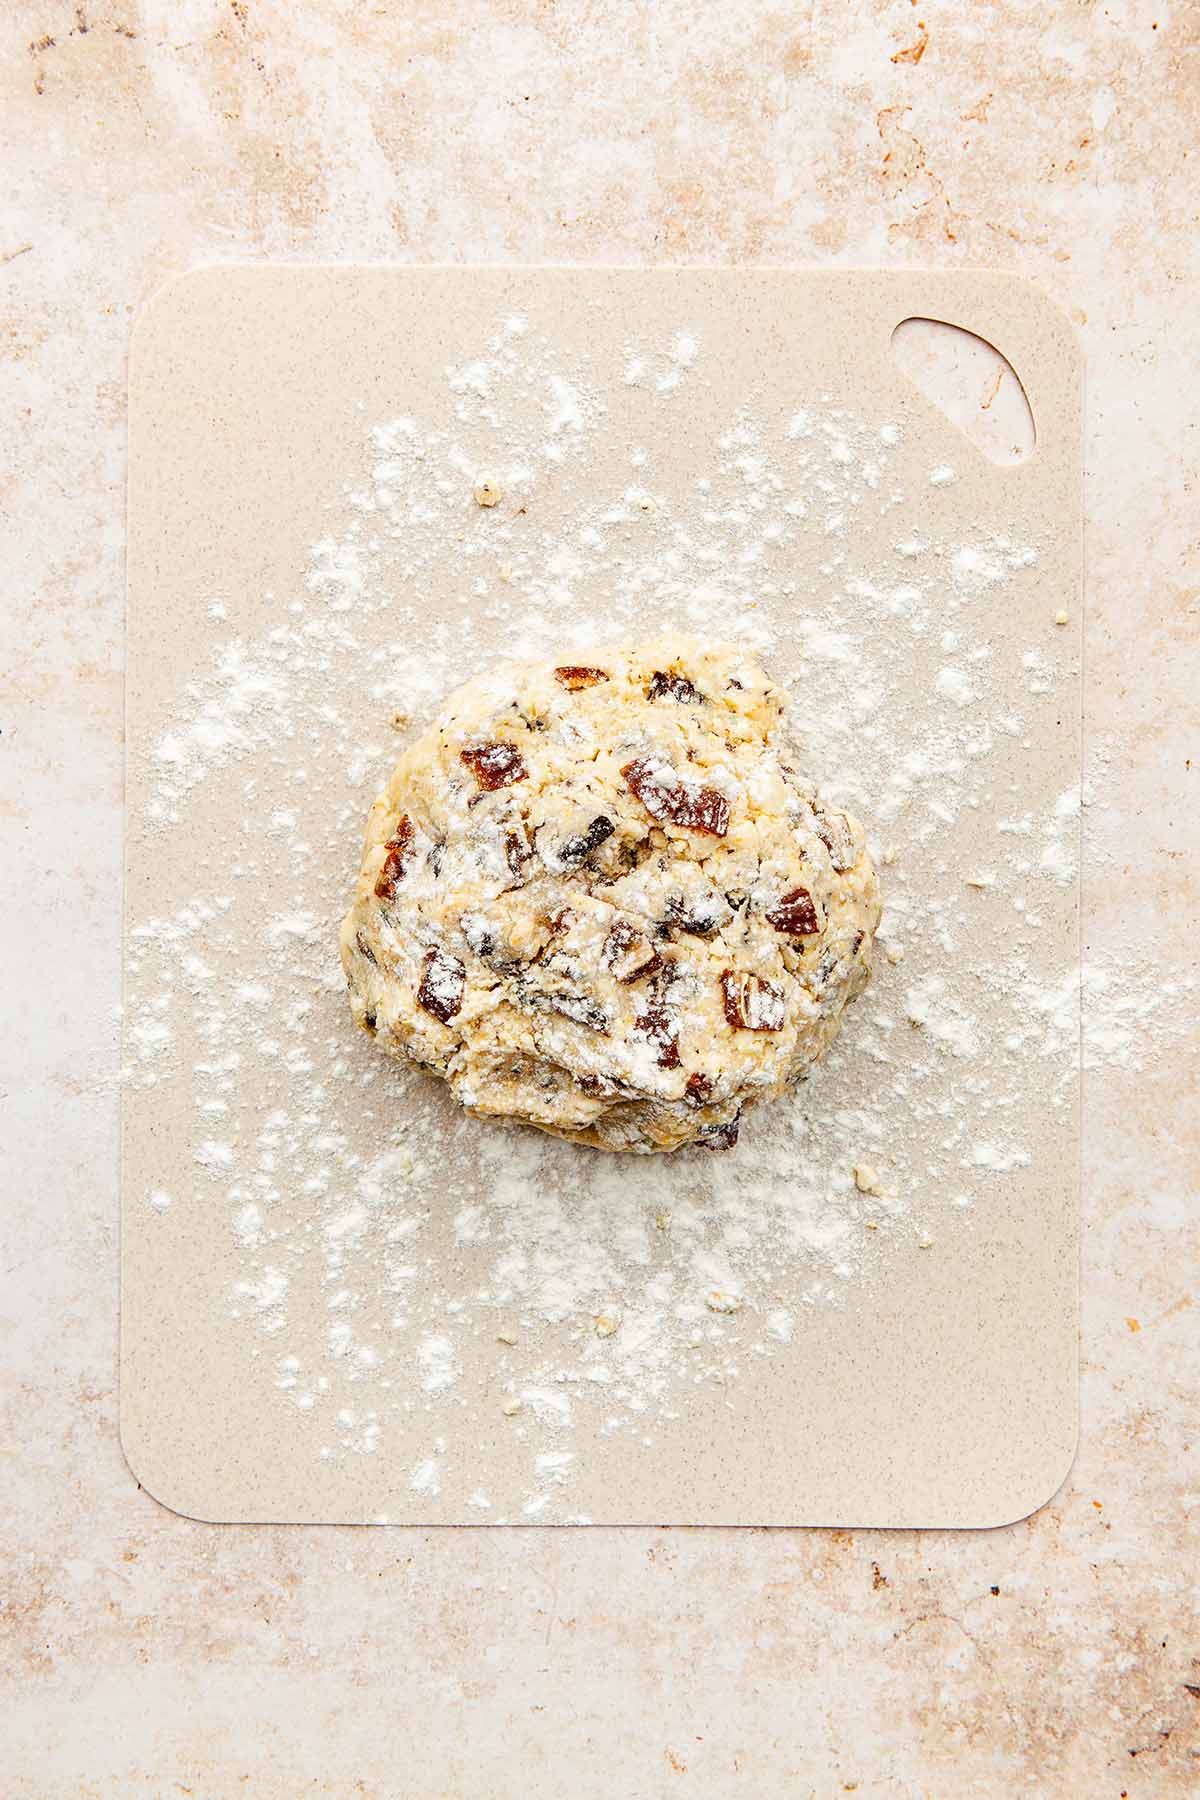 A ball of dough sprinkled with flour on a lightly floured work surface.